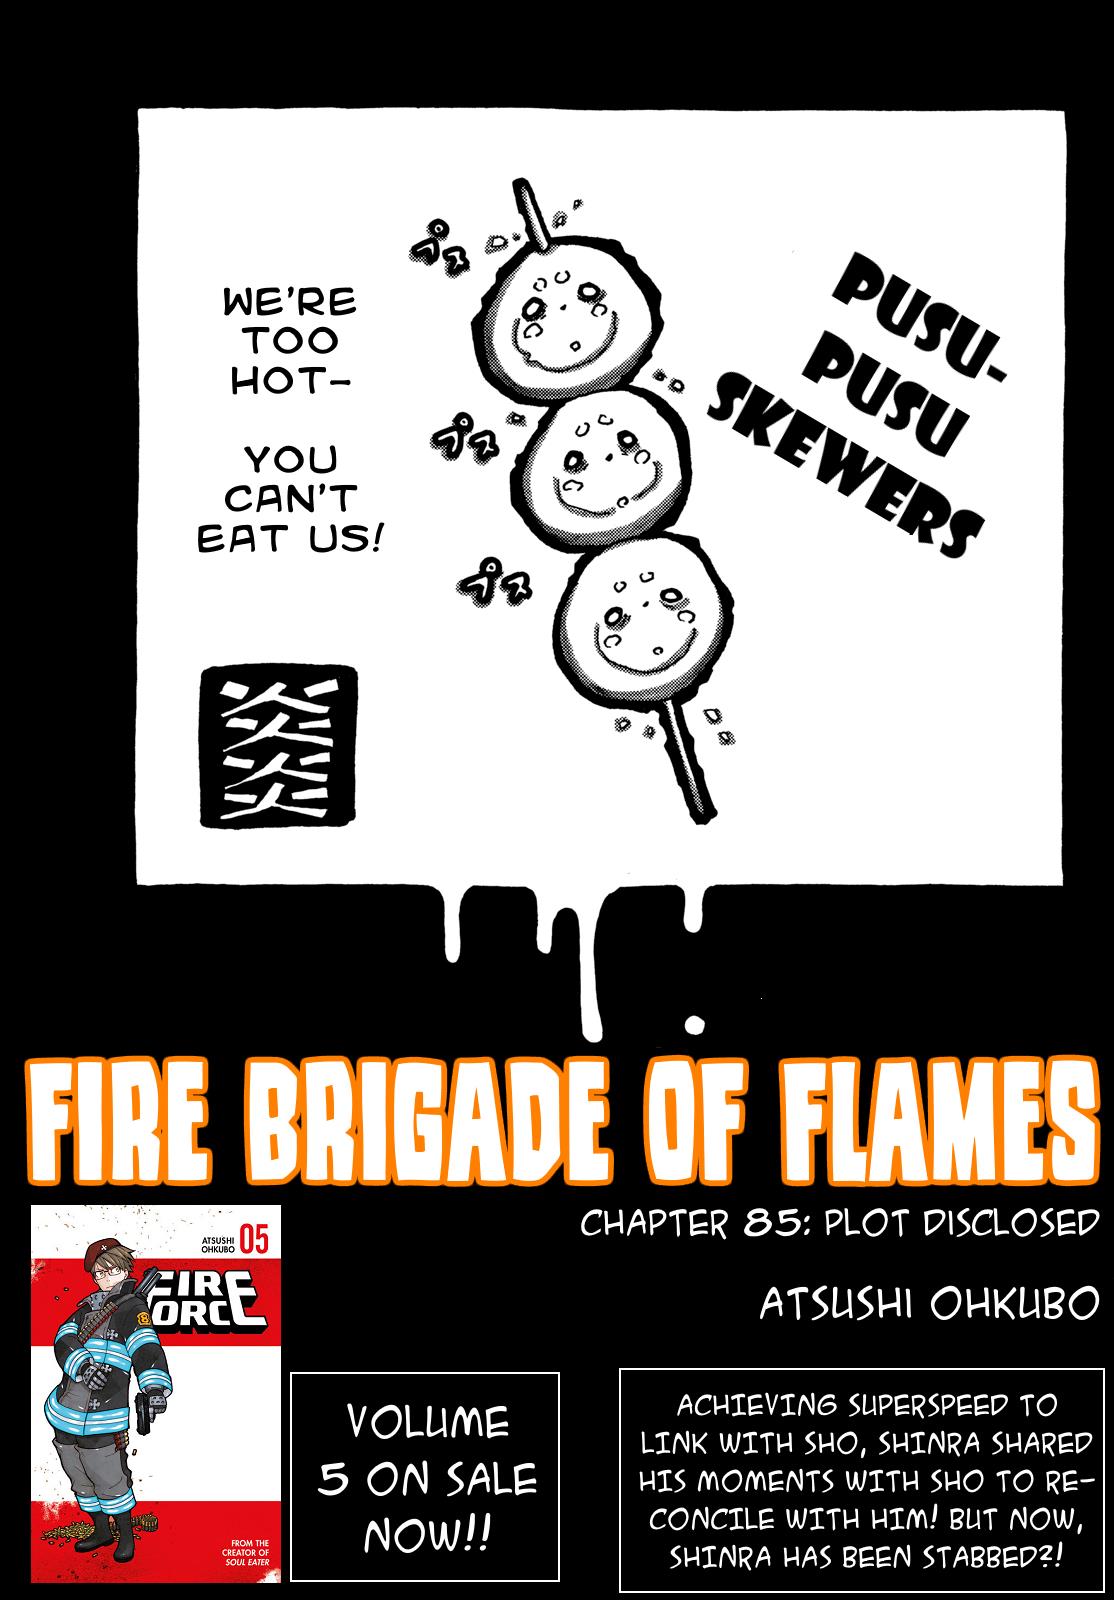 Fire Force Vol. 10 Ch. 85 Plot Disclosed